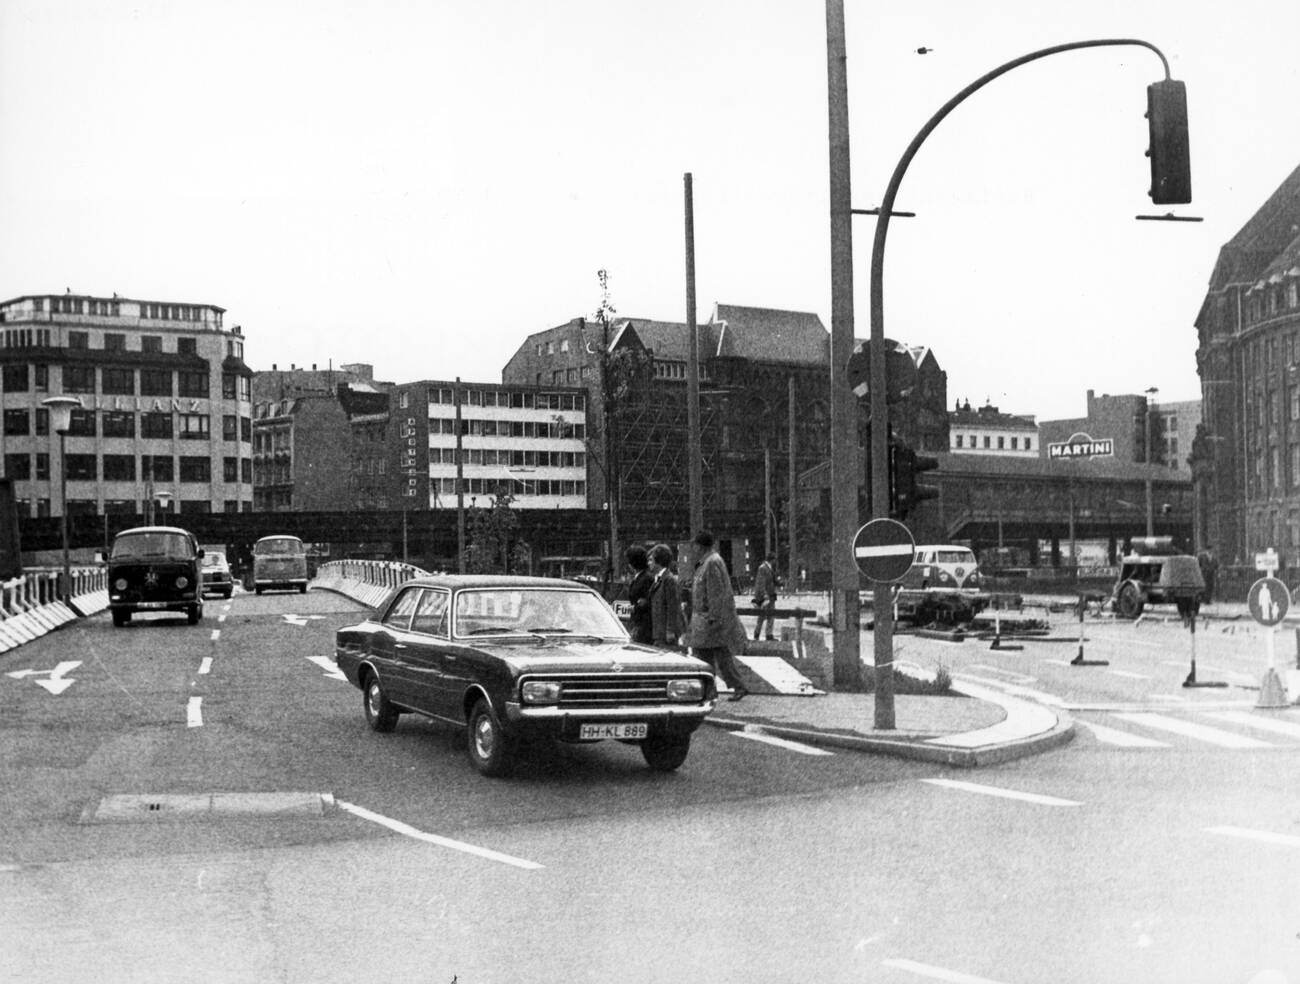 View of Rödingsmarkt and Altenwallbrücke streets in Hamburg, Germany in 1970.